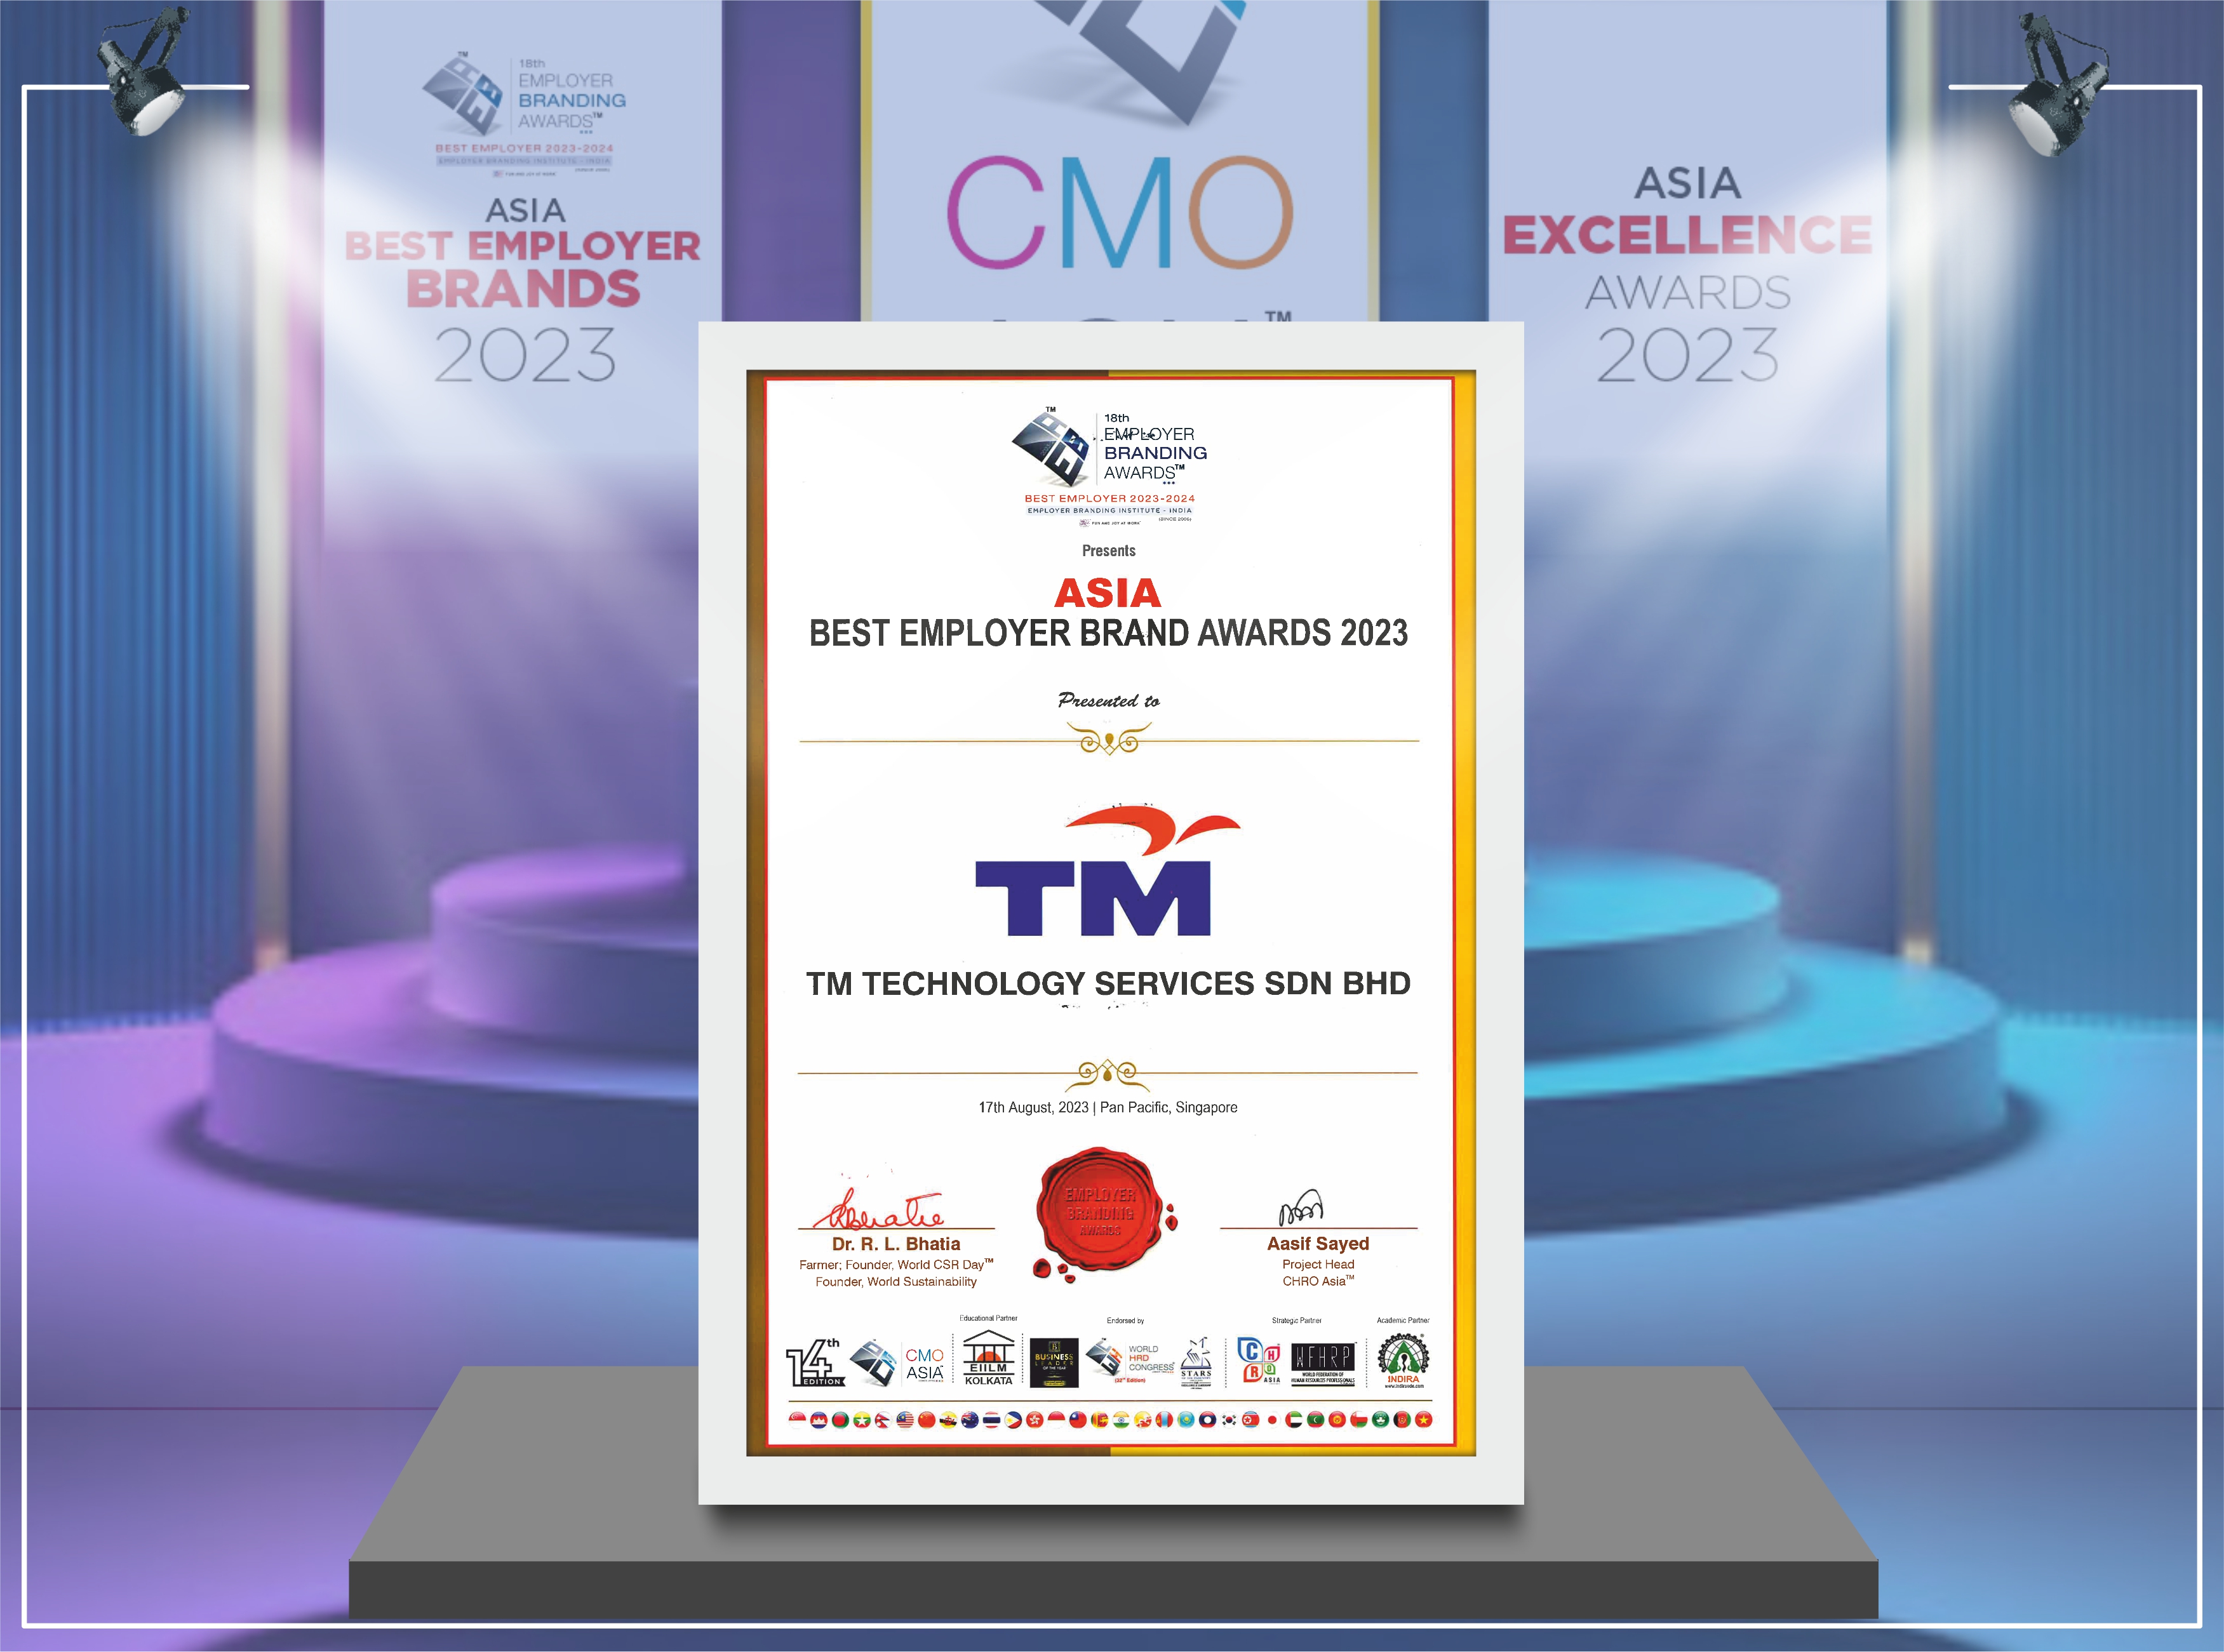 TM Wins Asia Best Employer Brand Awards 2023